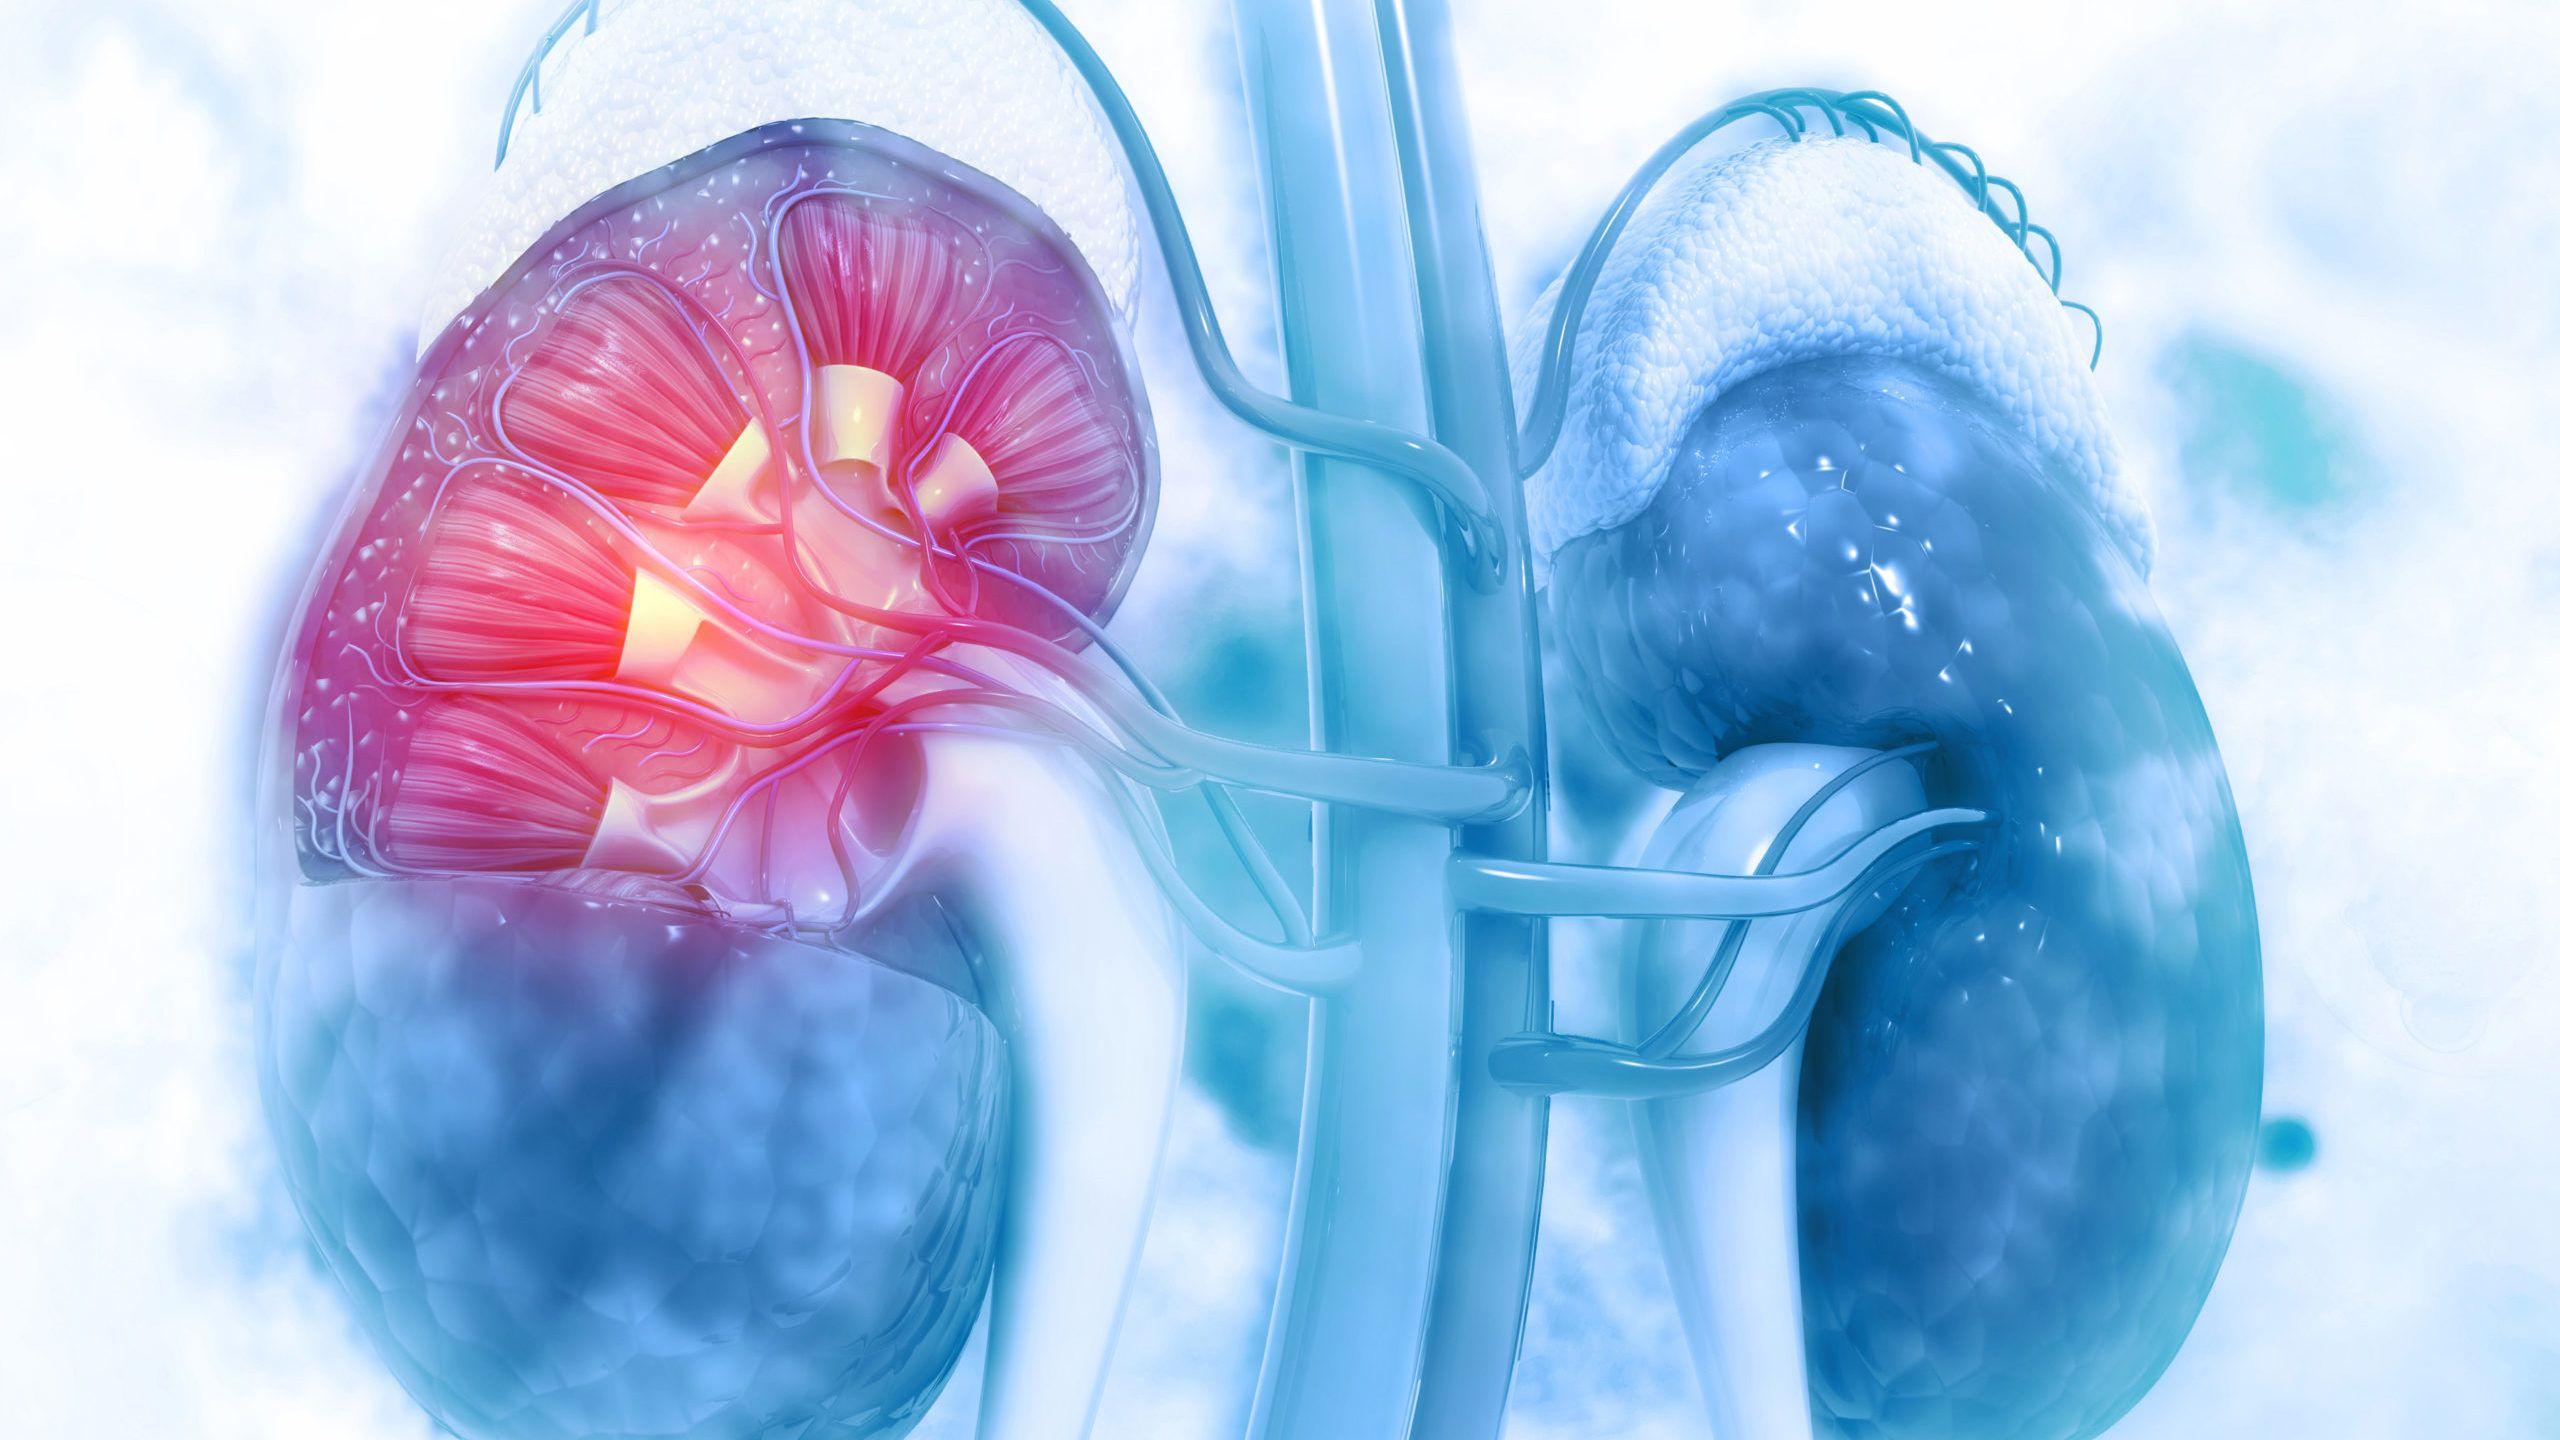 Human kidney cross section on scientific background Stock Illustration   Adobe Stock